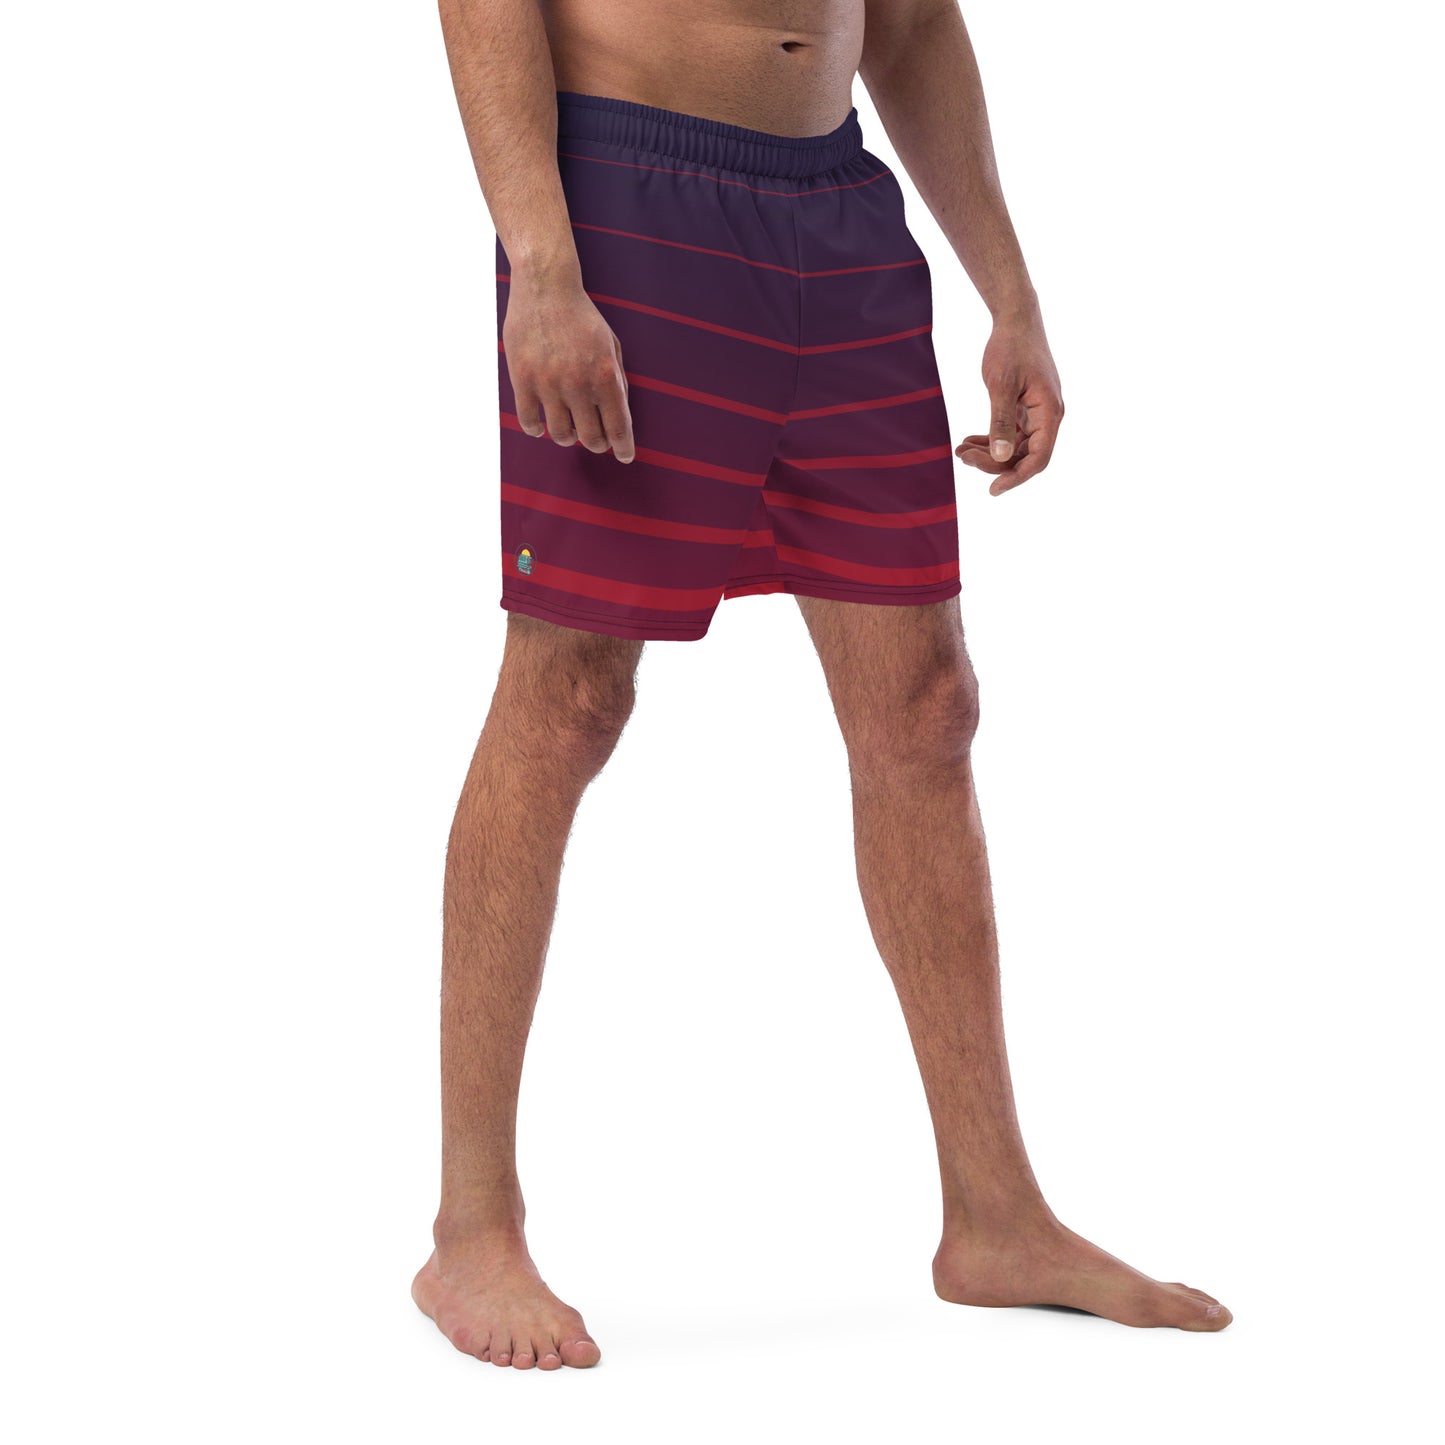 Black and Red Striped Men's swim trunks